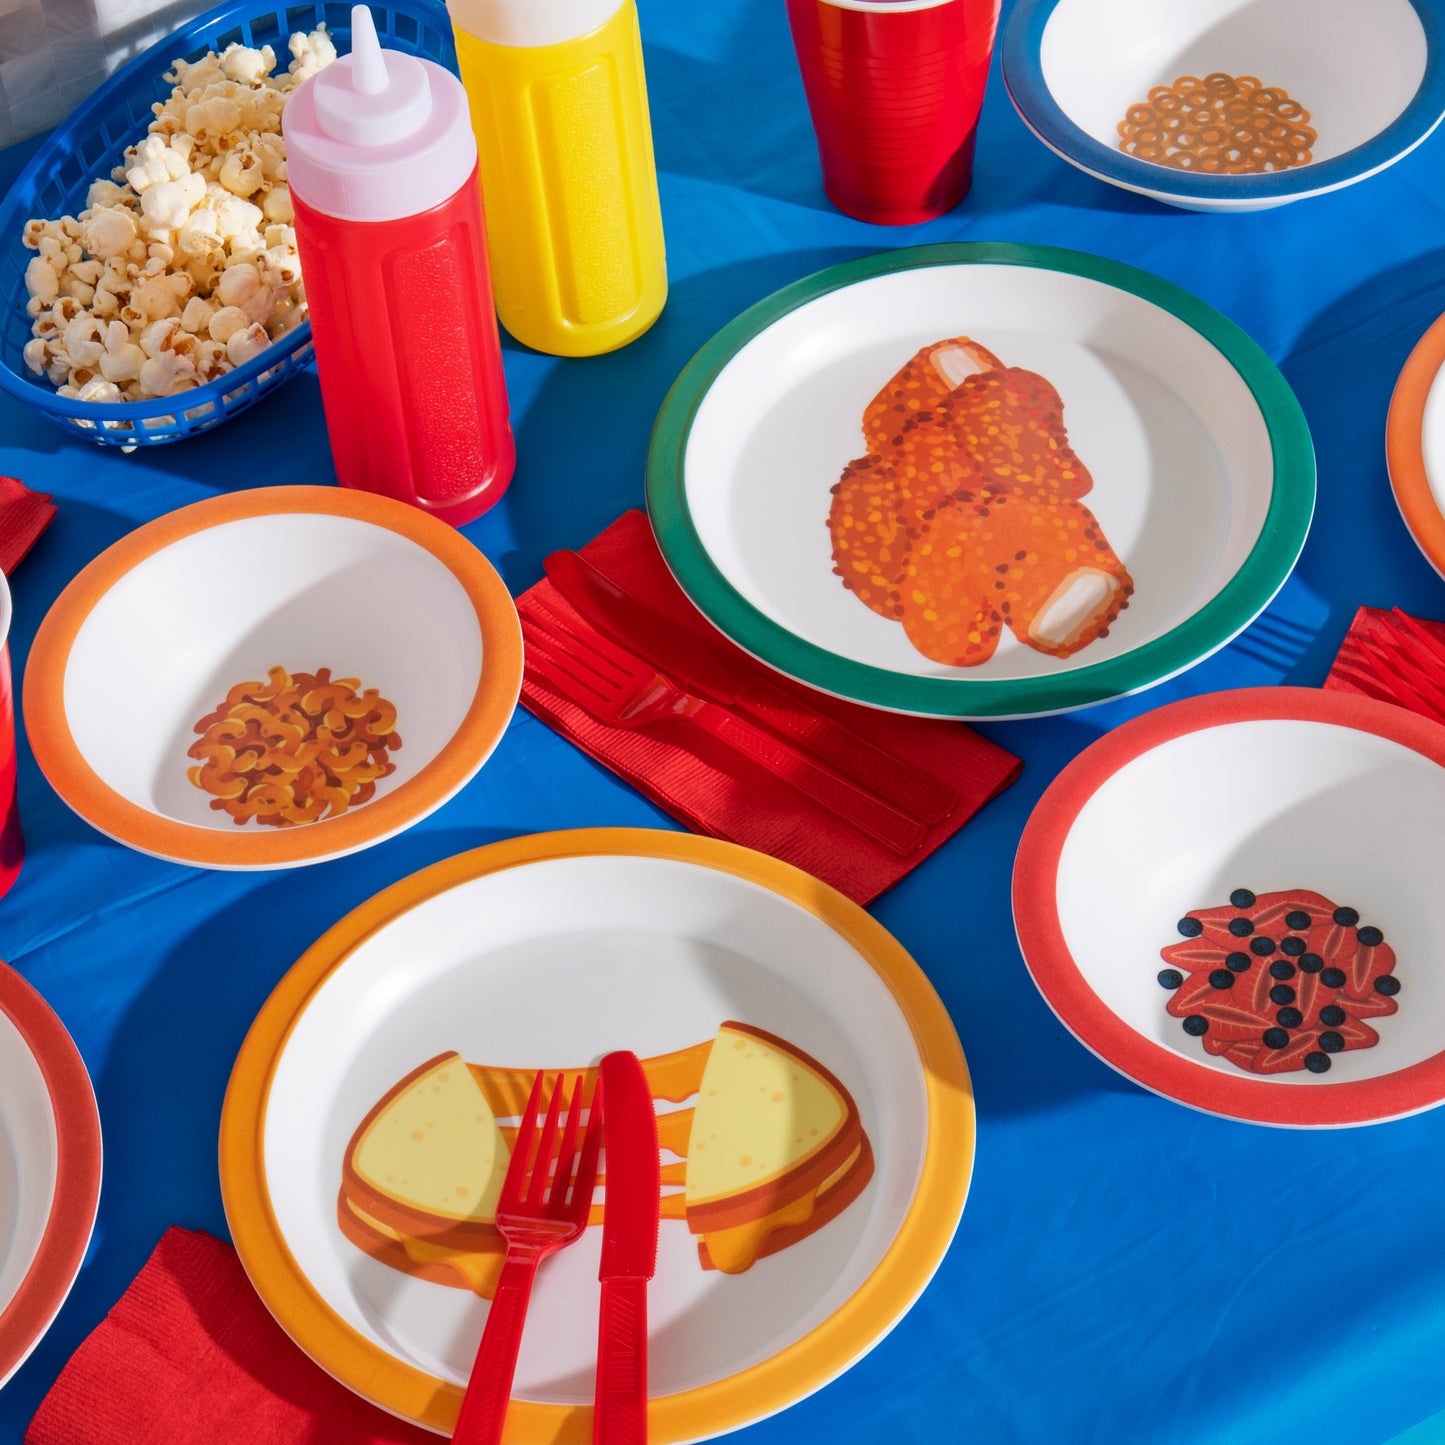 Mind Reader Kids Plate and Bowl Set, Toddler Plates, Cereal and Soup Bowl, Melamine, 8.25"L x 8.25"W 1"H, 8 pcs, Multi-color